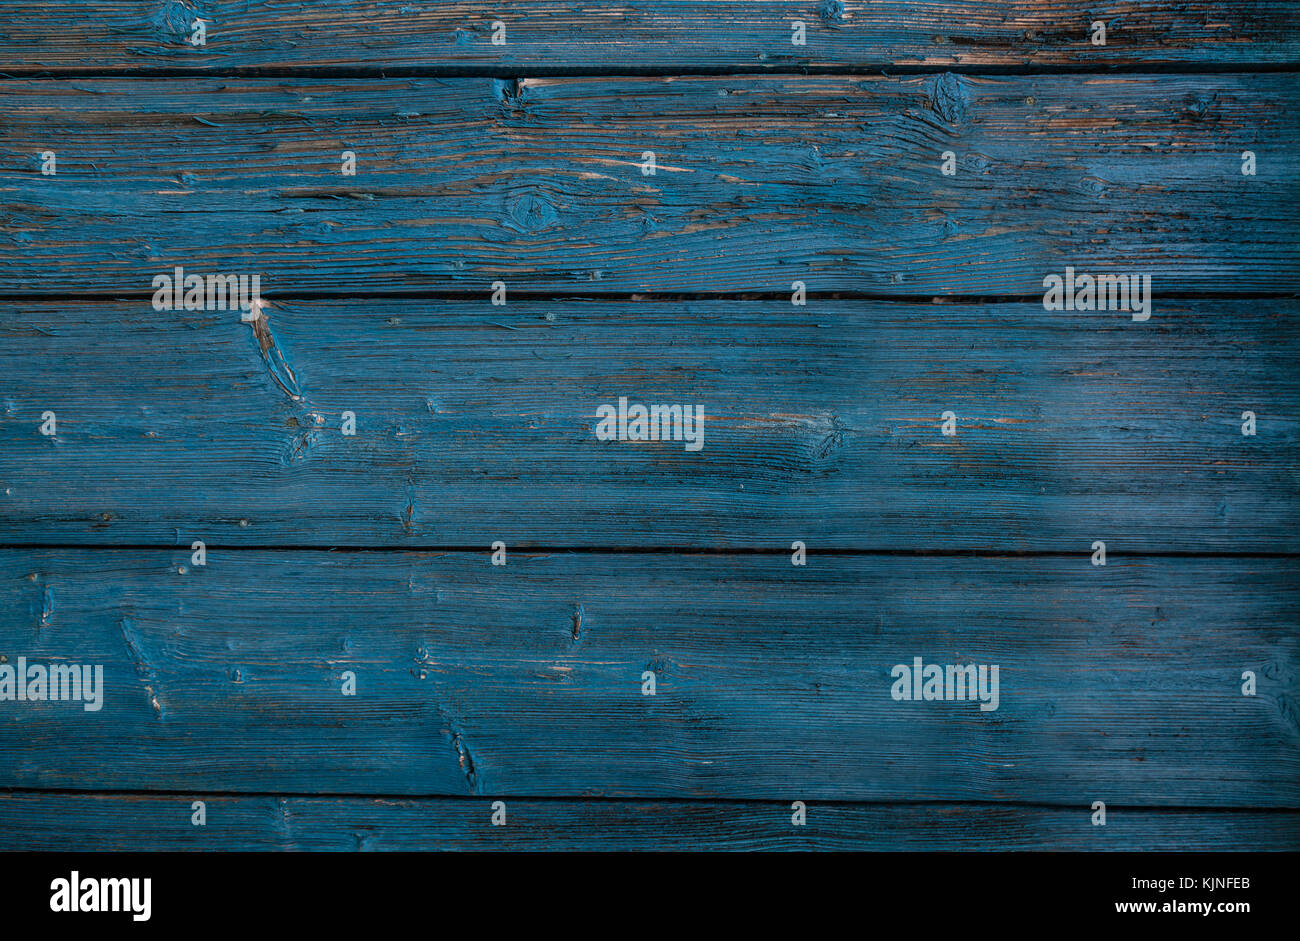 Turquoise wood texture retro vintage background. Stock Photo